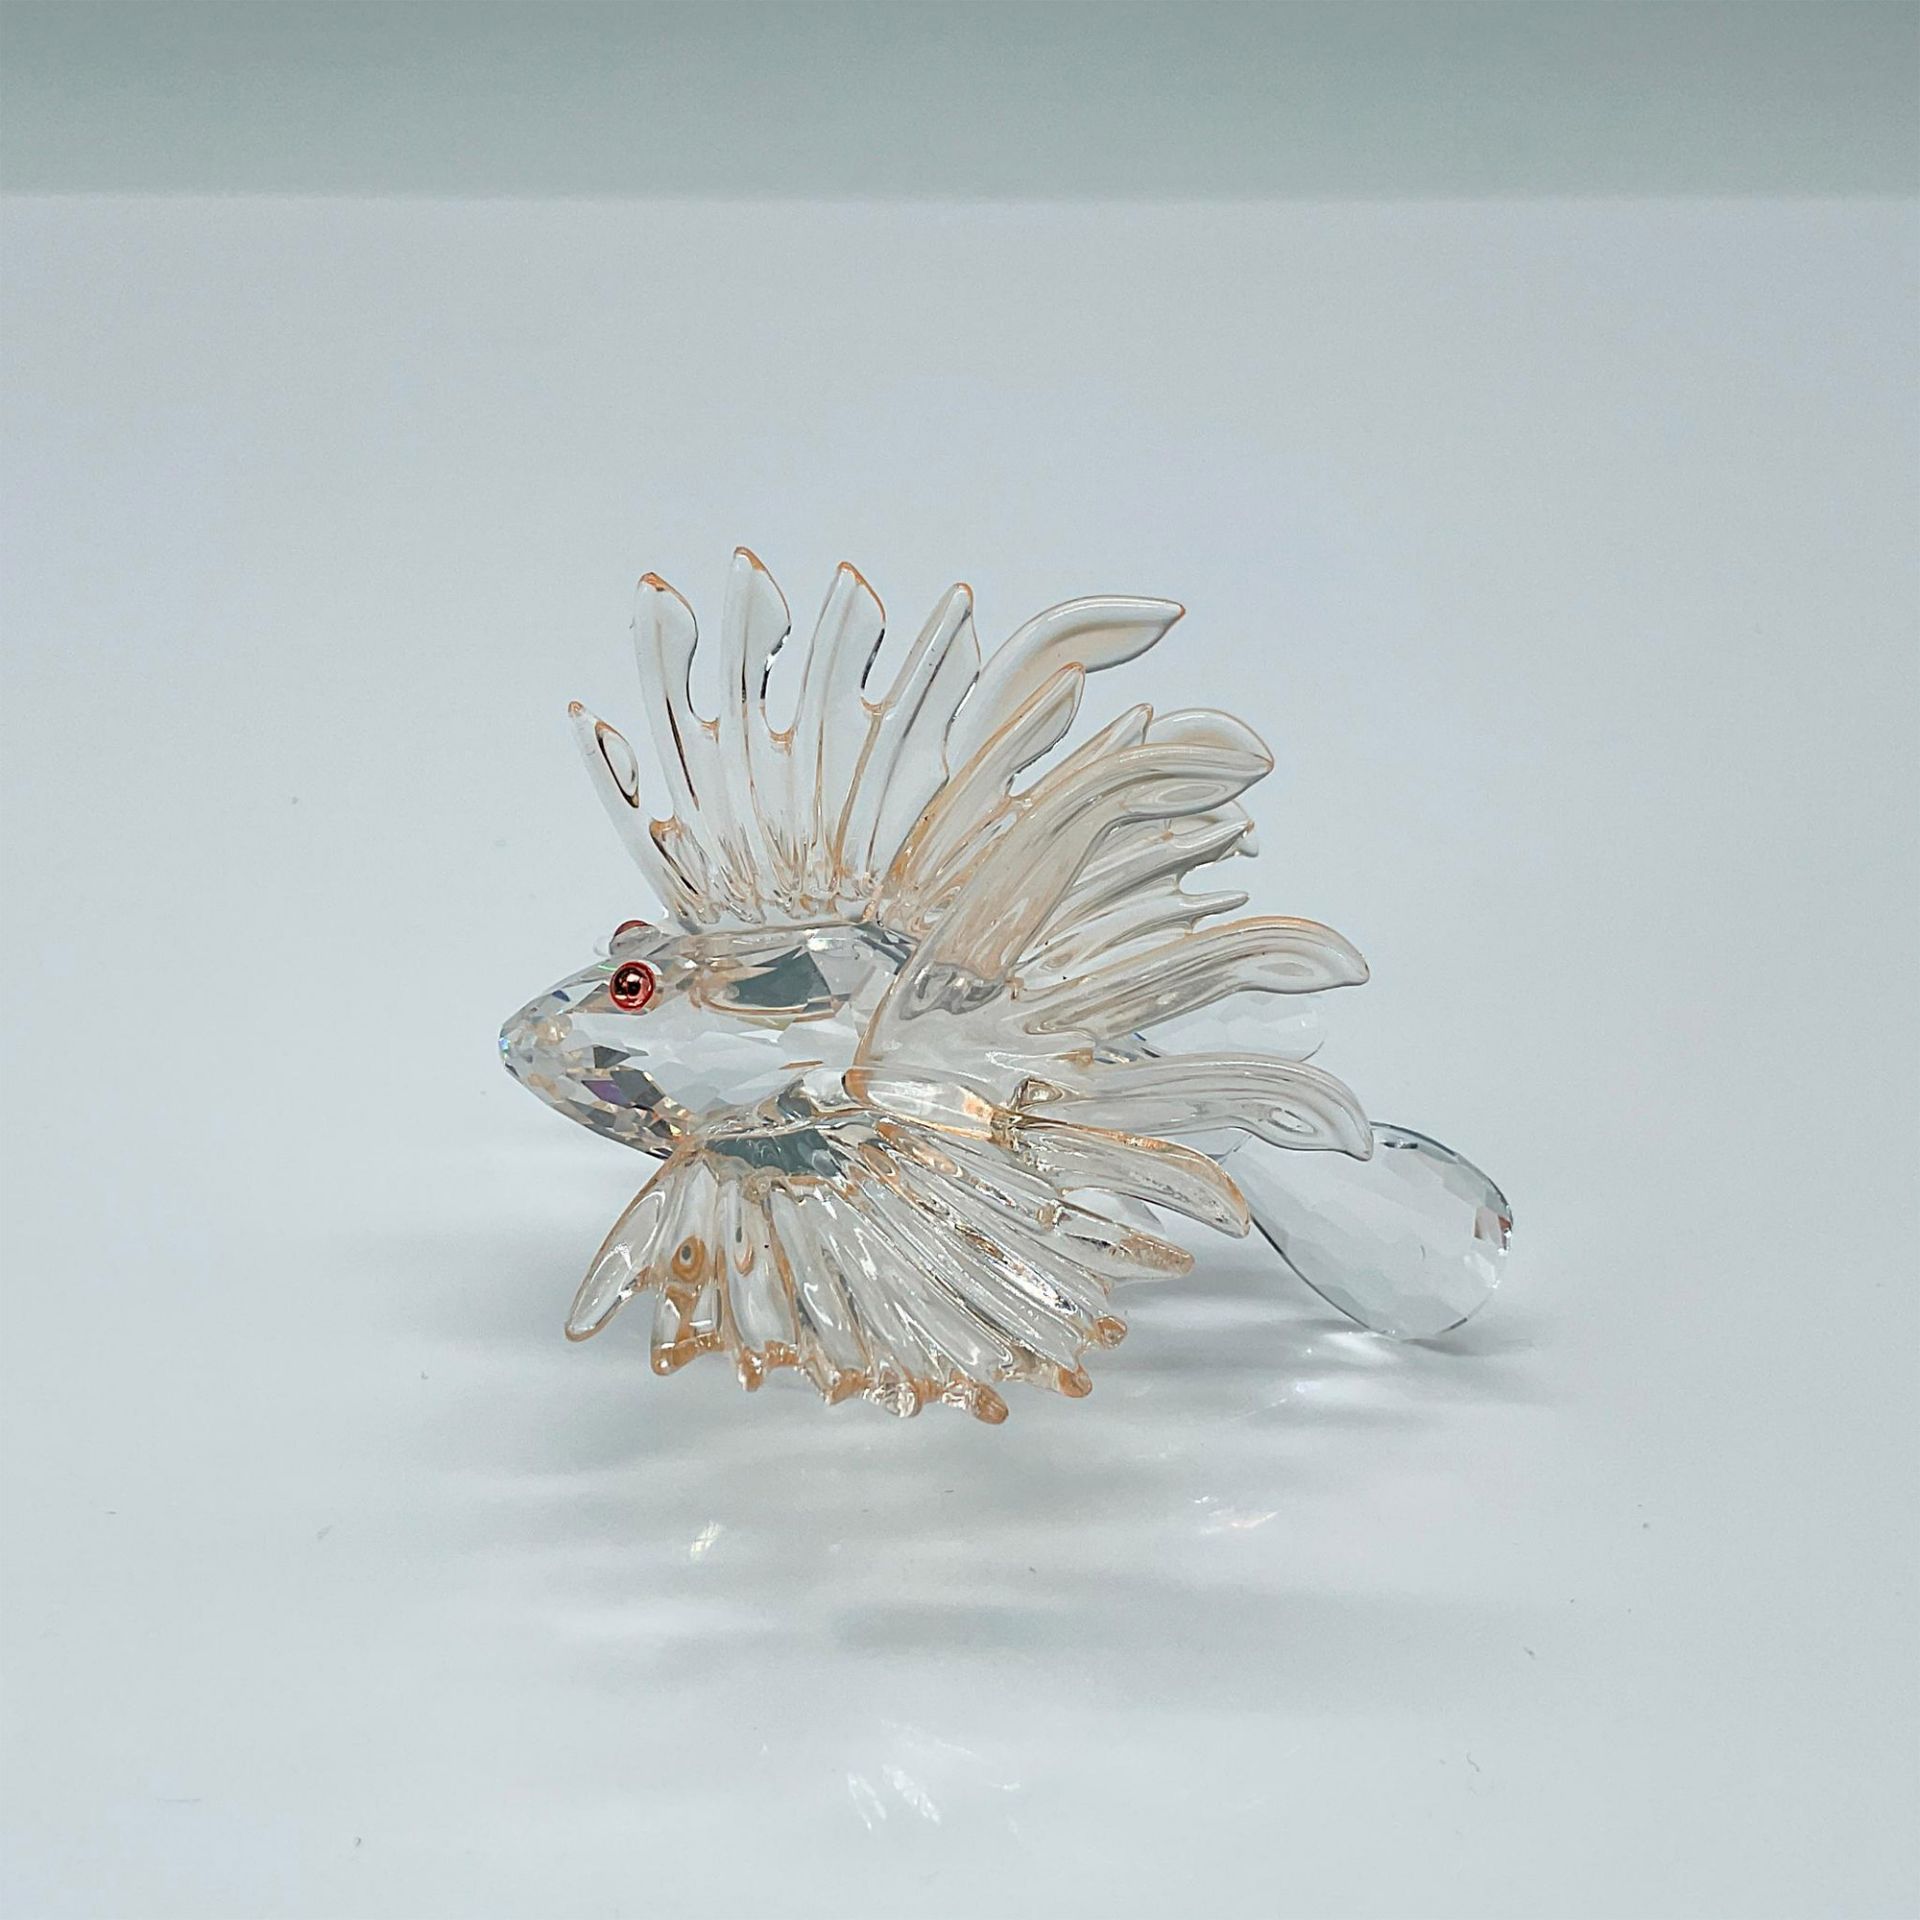 Swarovski Crystal Figurine, Lionfish